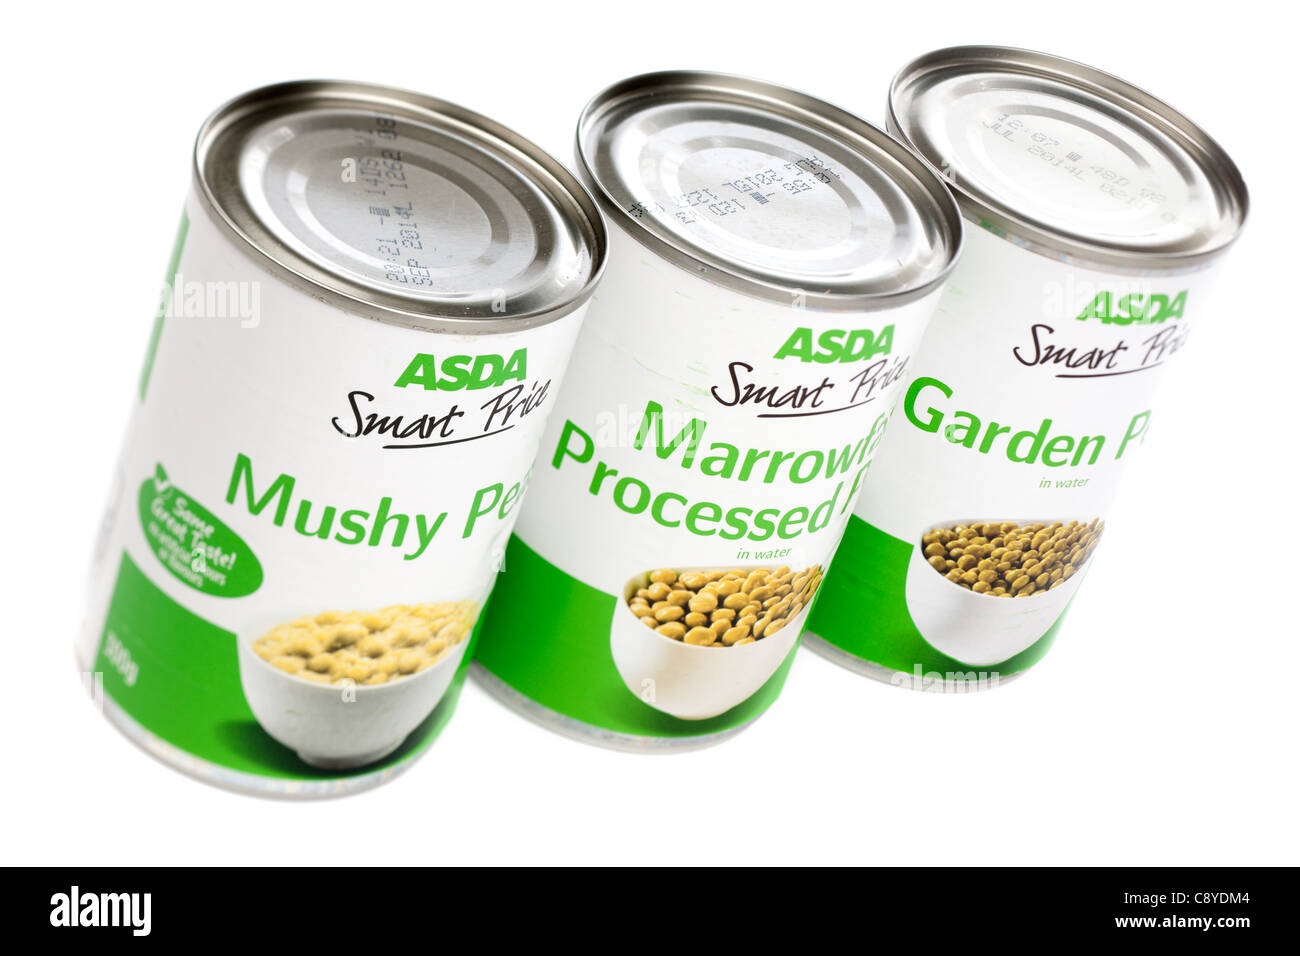 Three tins of Asda Smart price peas marrowfat Mushy and Garden Stock Photo